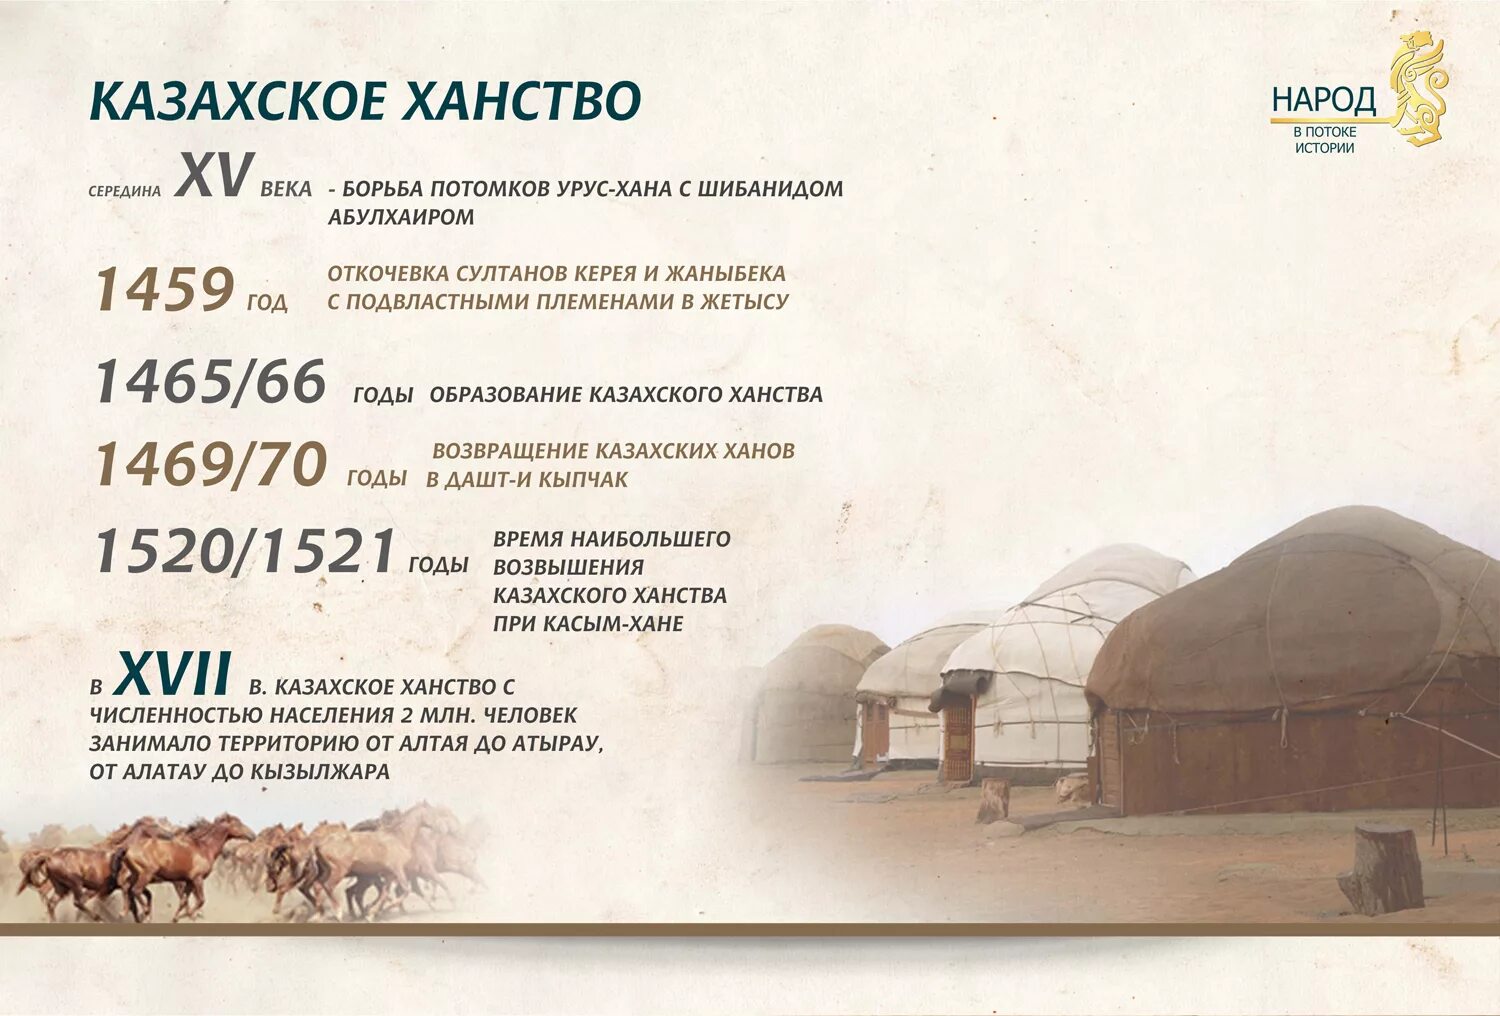 Каз ханы. Образование казахского ханства. Год основания казахского ханства. Год образования казахского ханства. Когда образовалалось казахское ханство.